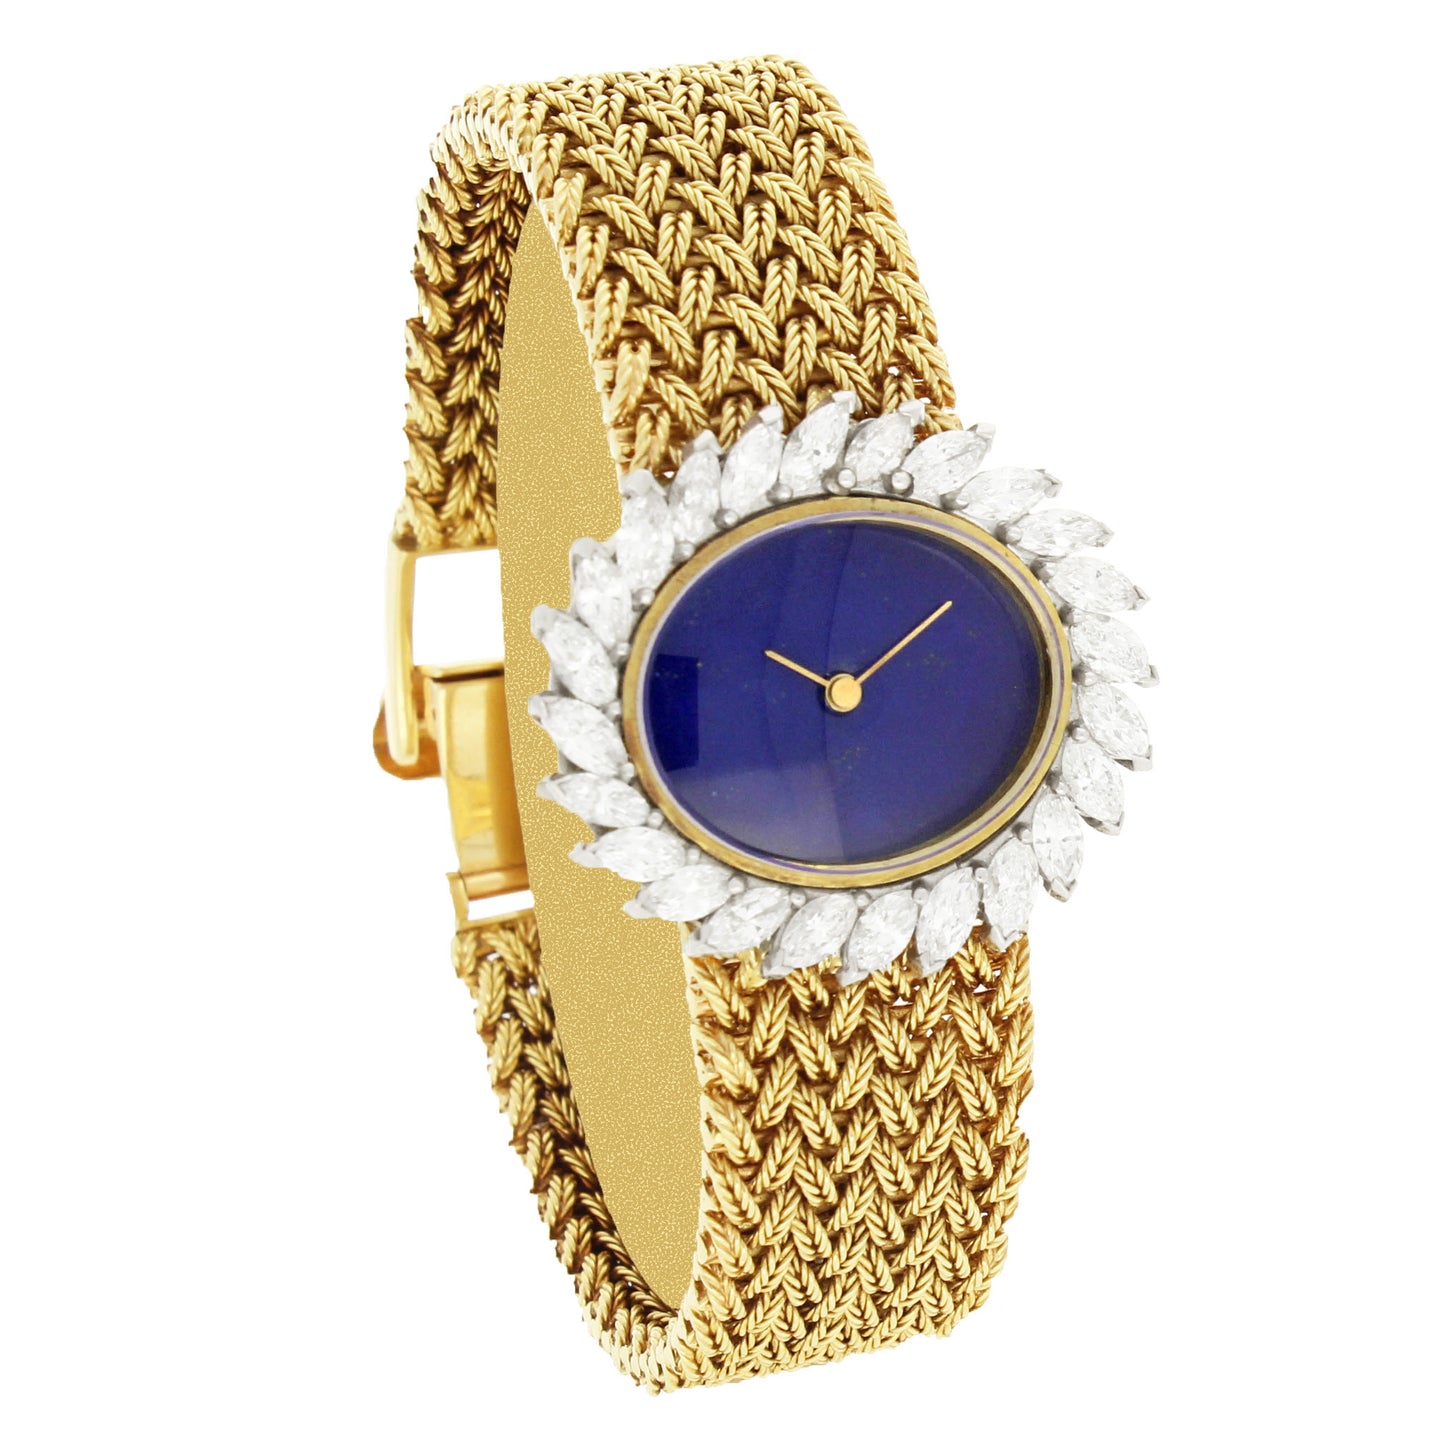 18ct yellow gold Ulysee Nardin, diamond set bracelet watch with lapis lazuli dial. Made 1970's